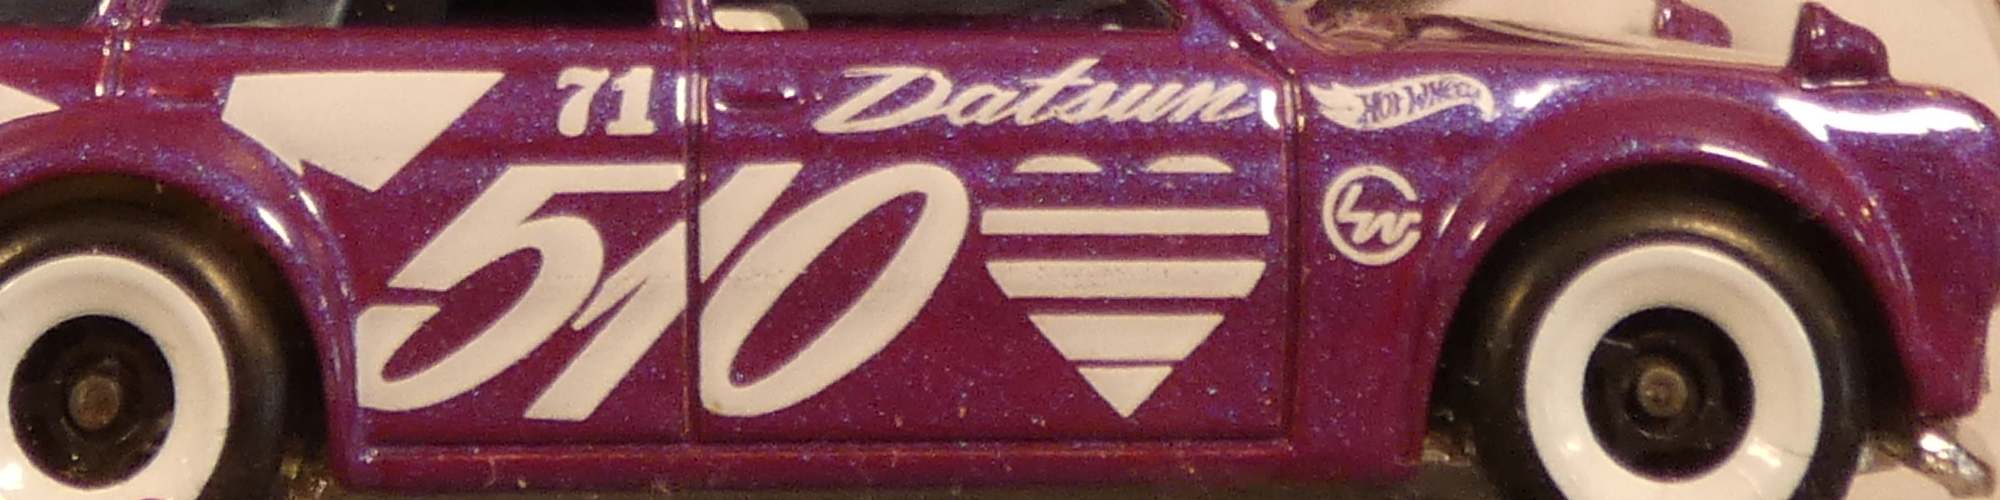 Hot Wheels – Datsun Bluebird Wagon 510